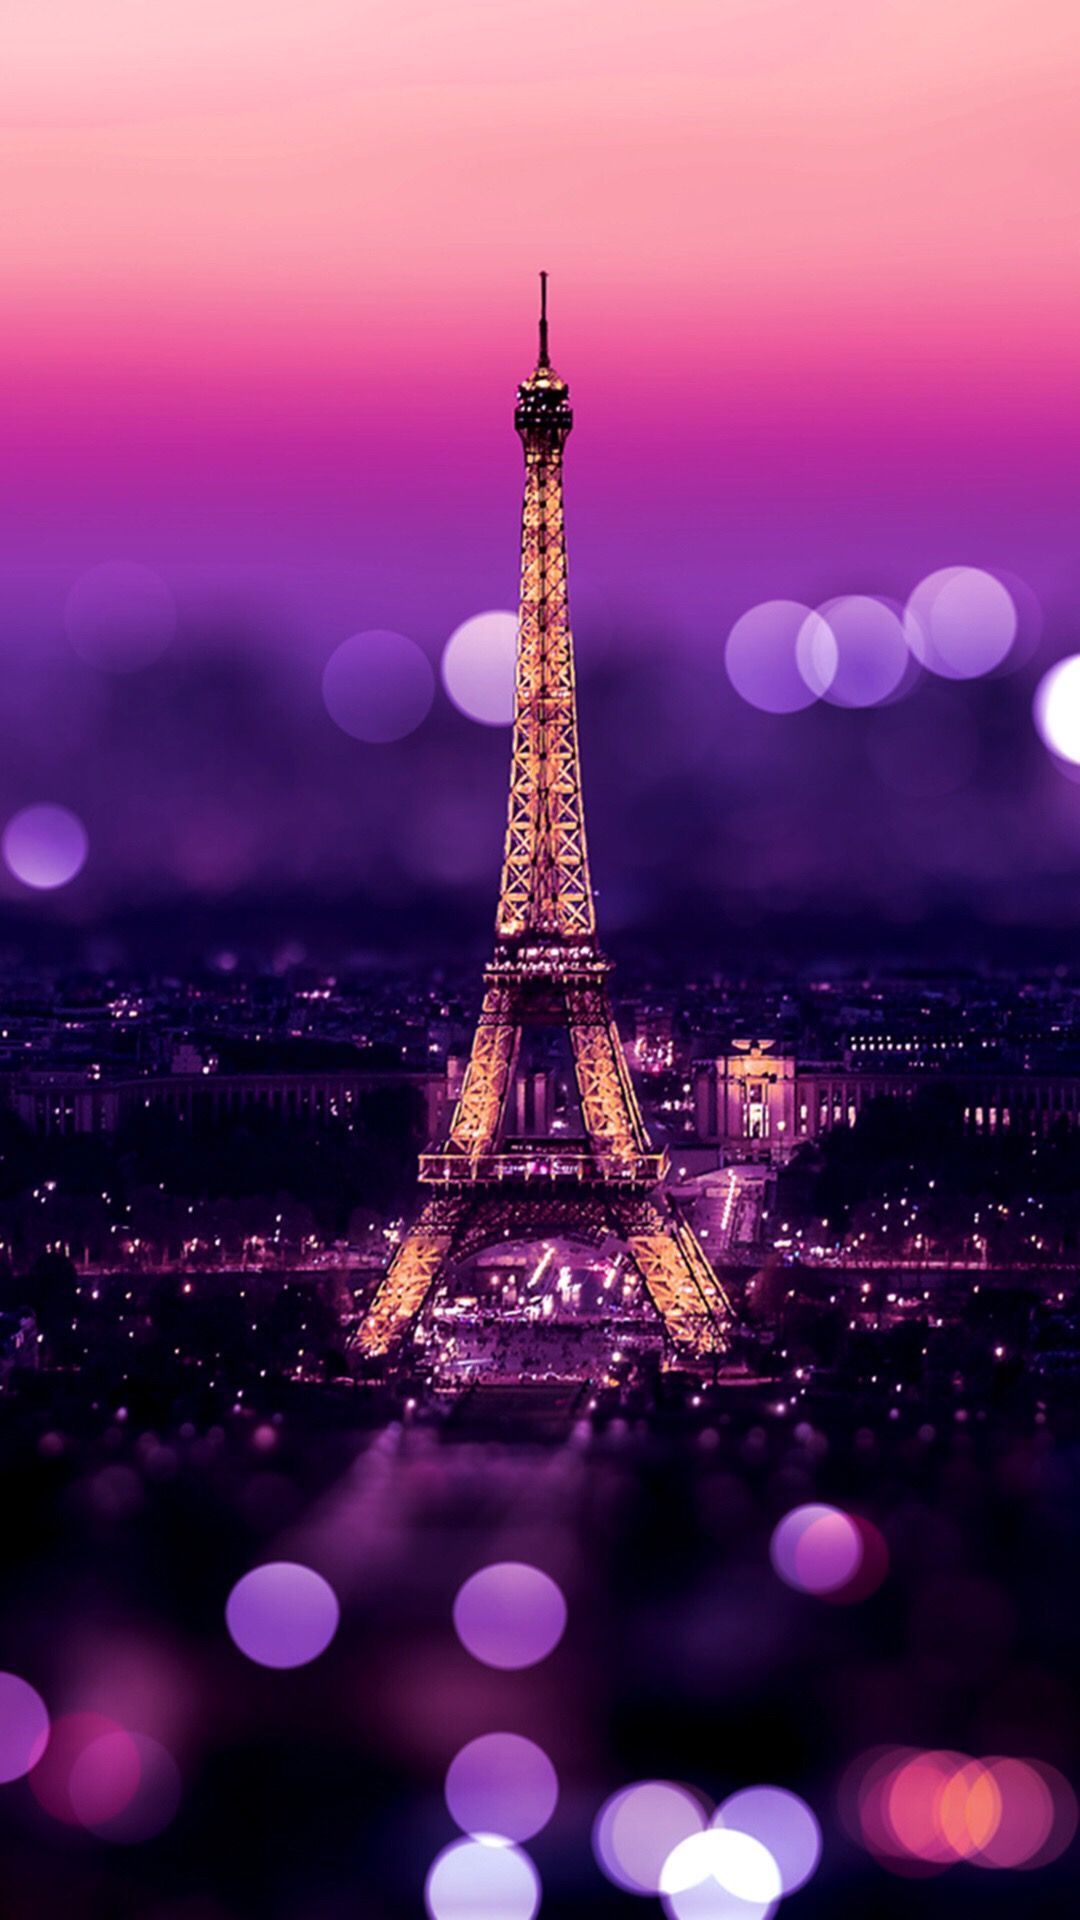 Paris Eiffel tower wallpaper. Paris wallpaper, Beautiful wallpaper, Eiffel tower